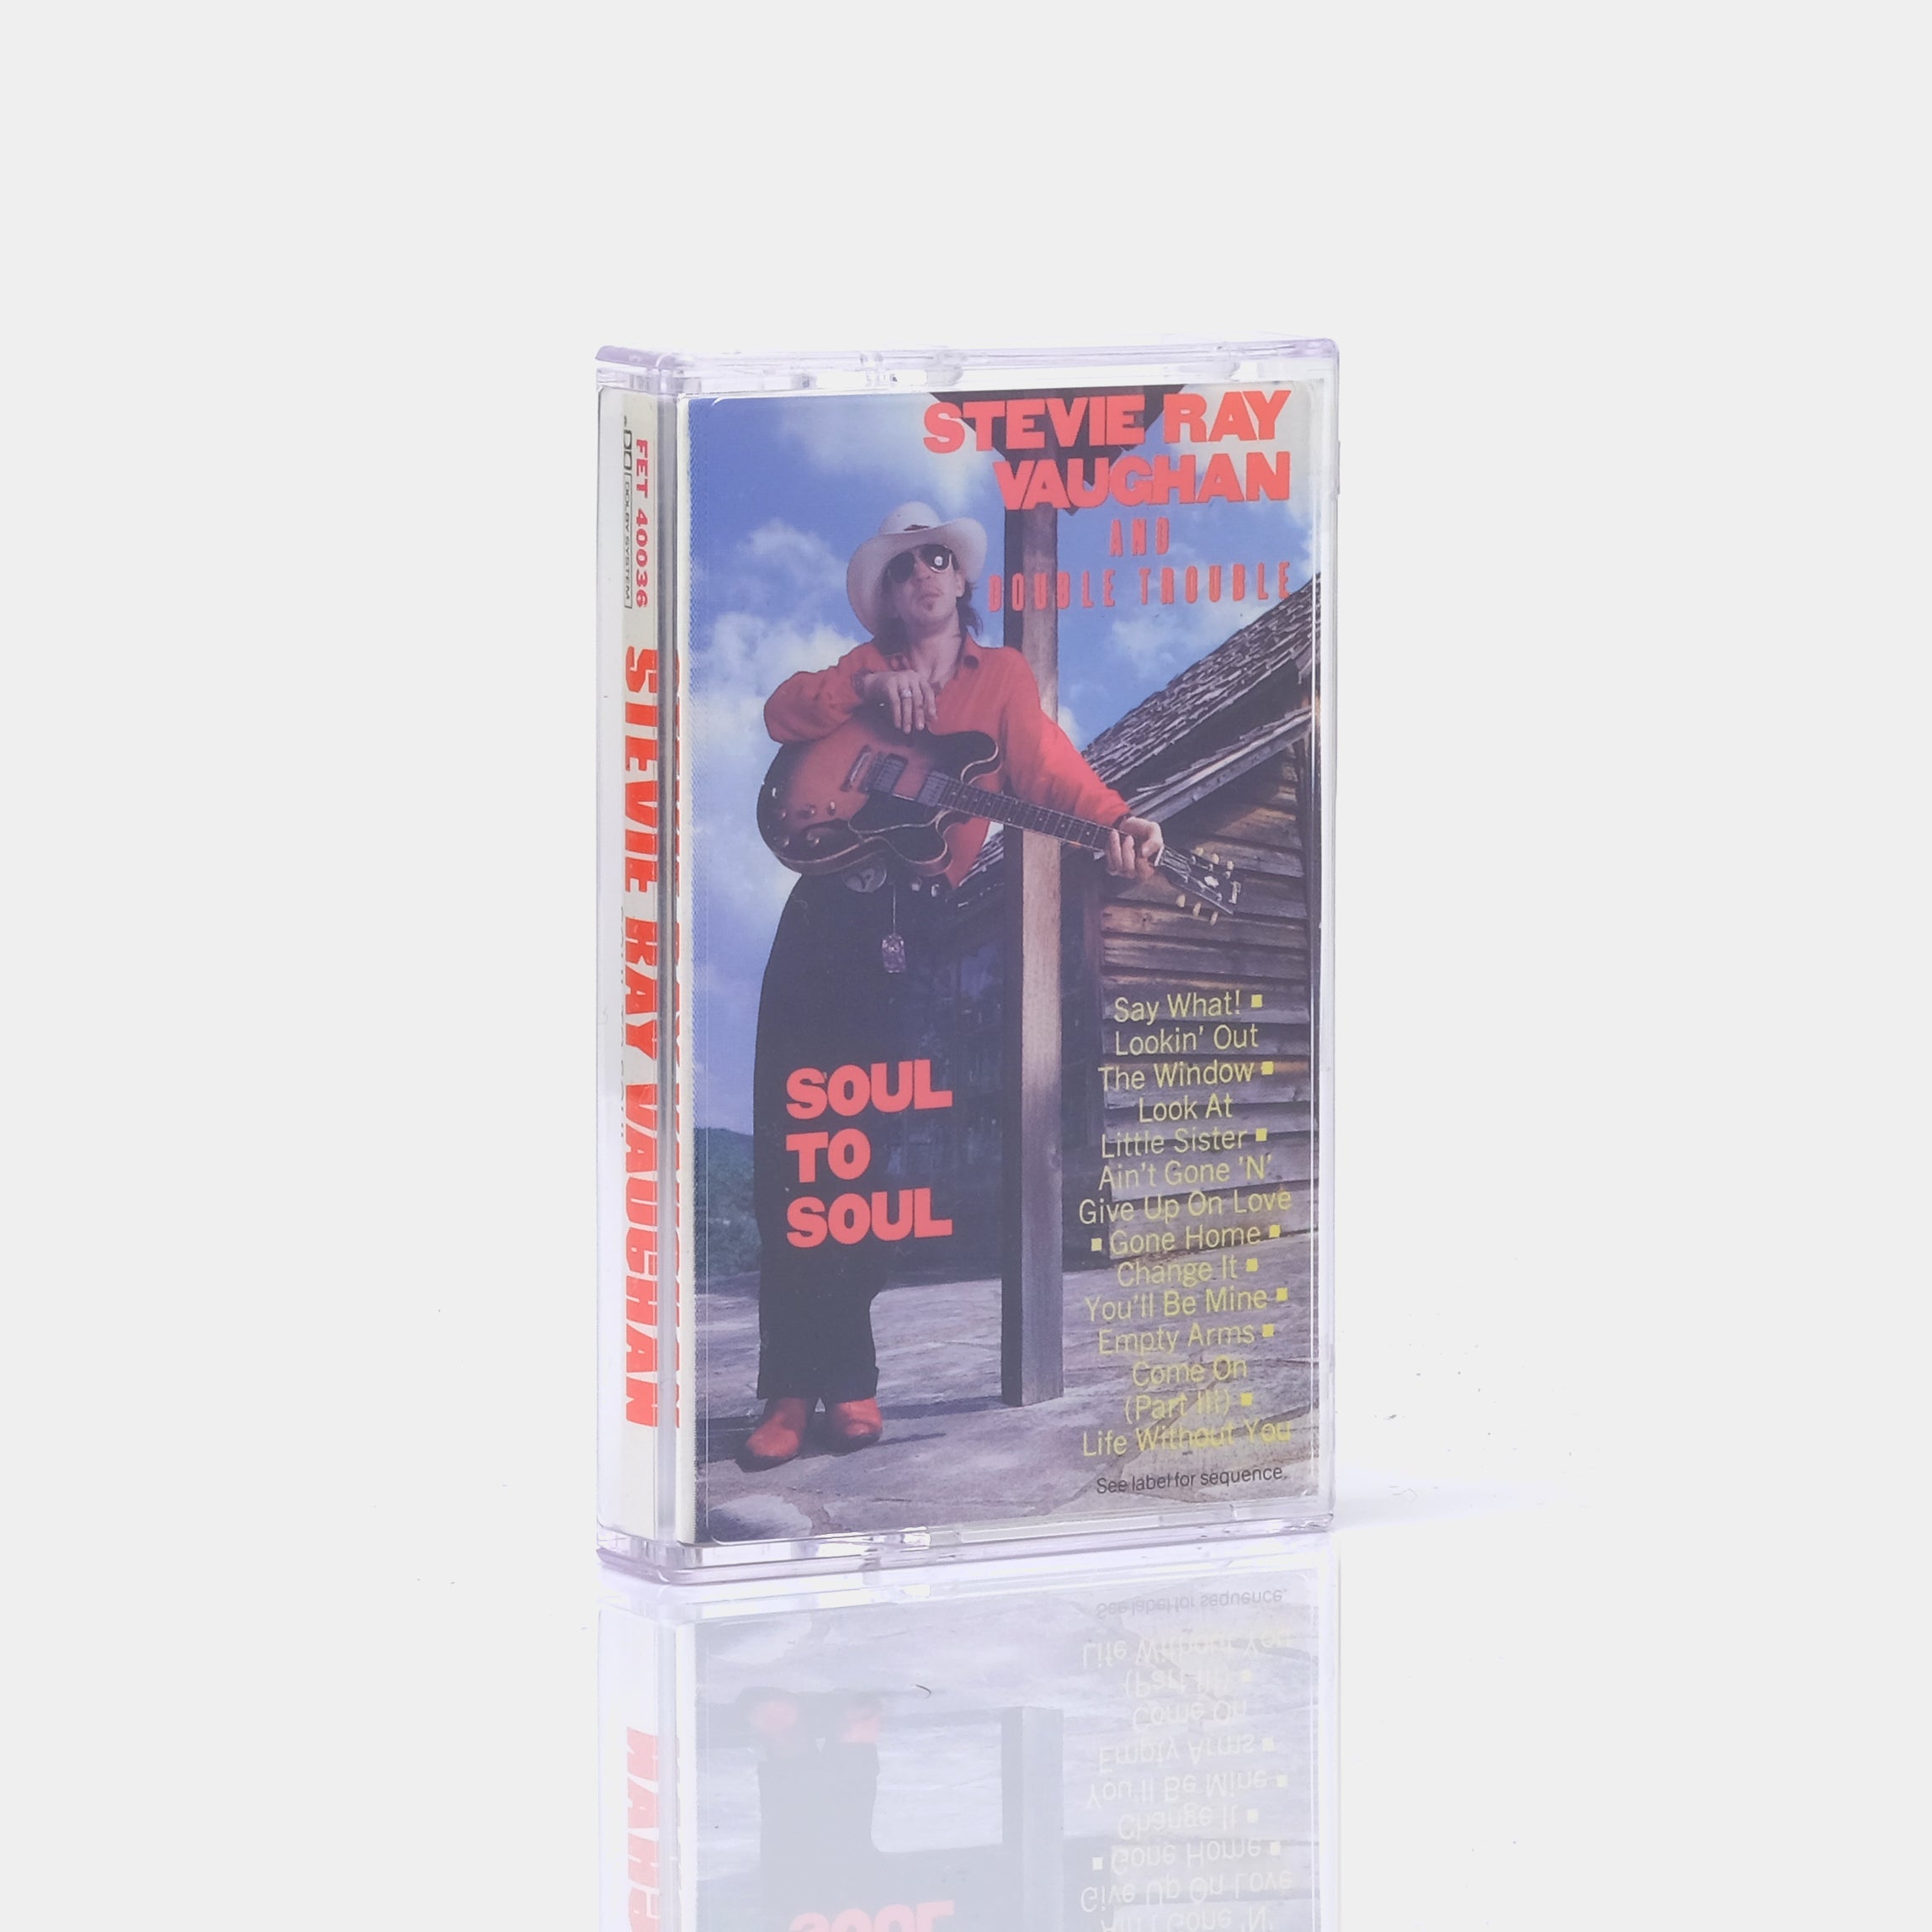 Stevie Ray Vaughan - Soul To Soul Cassette Tape